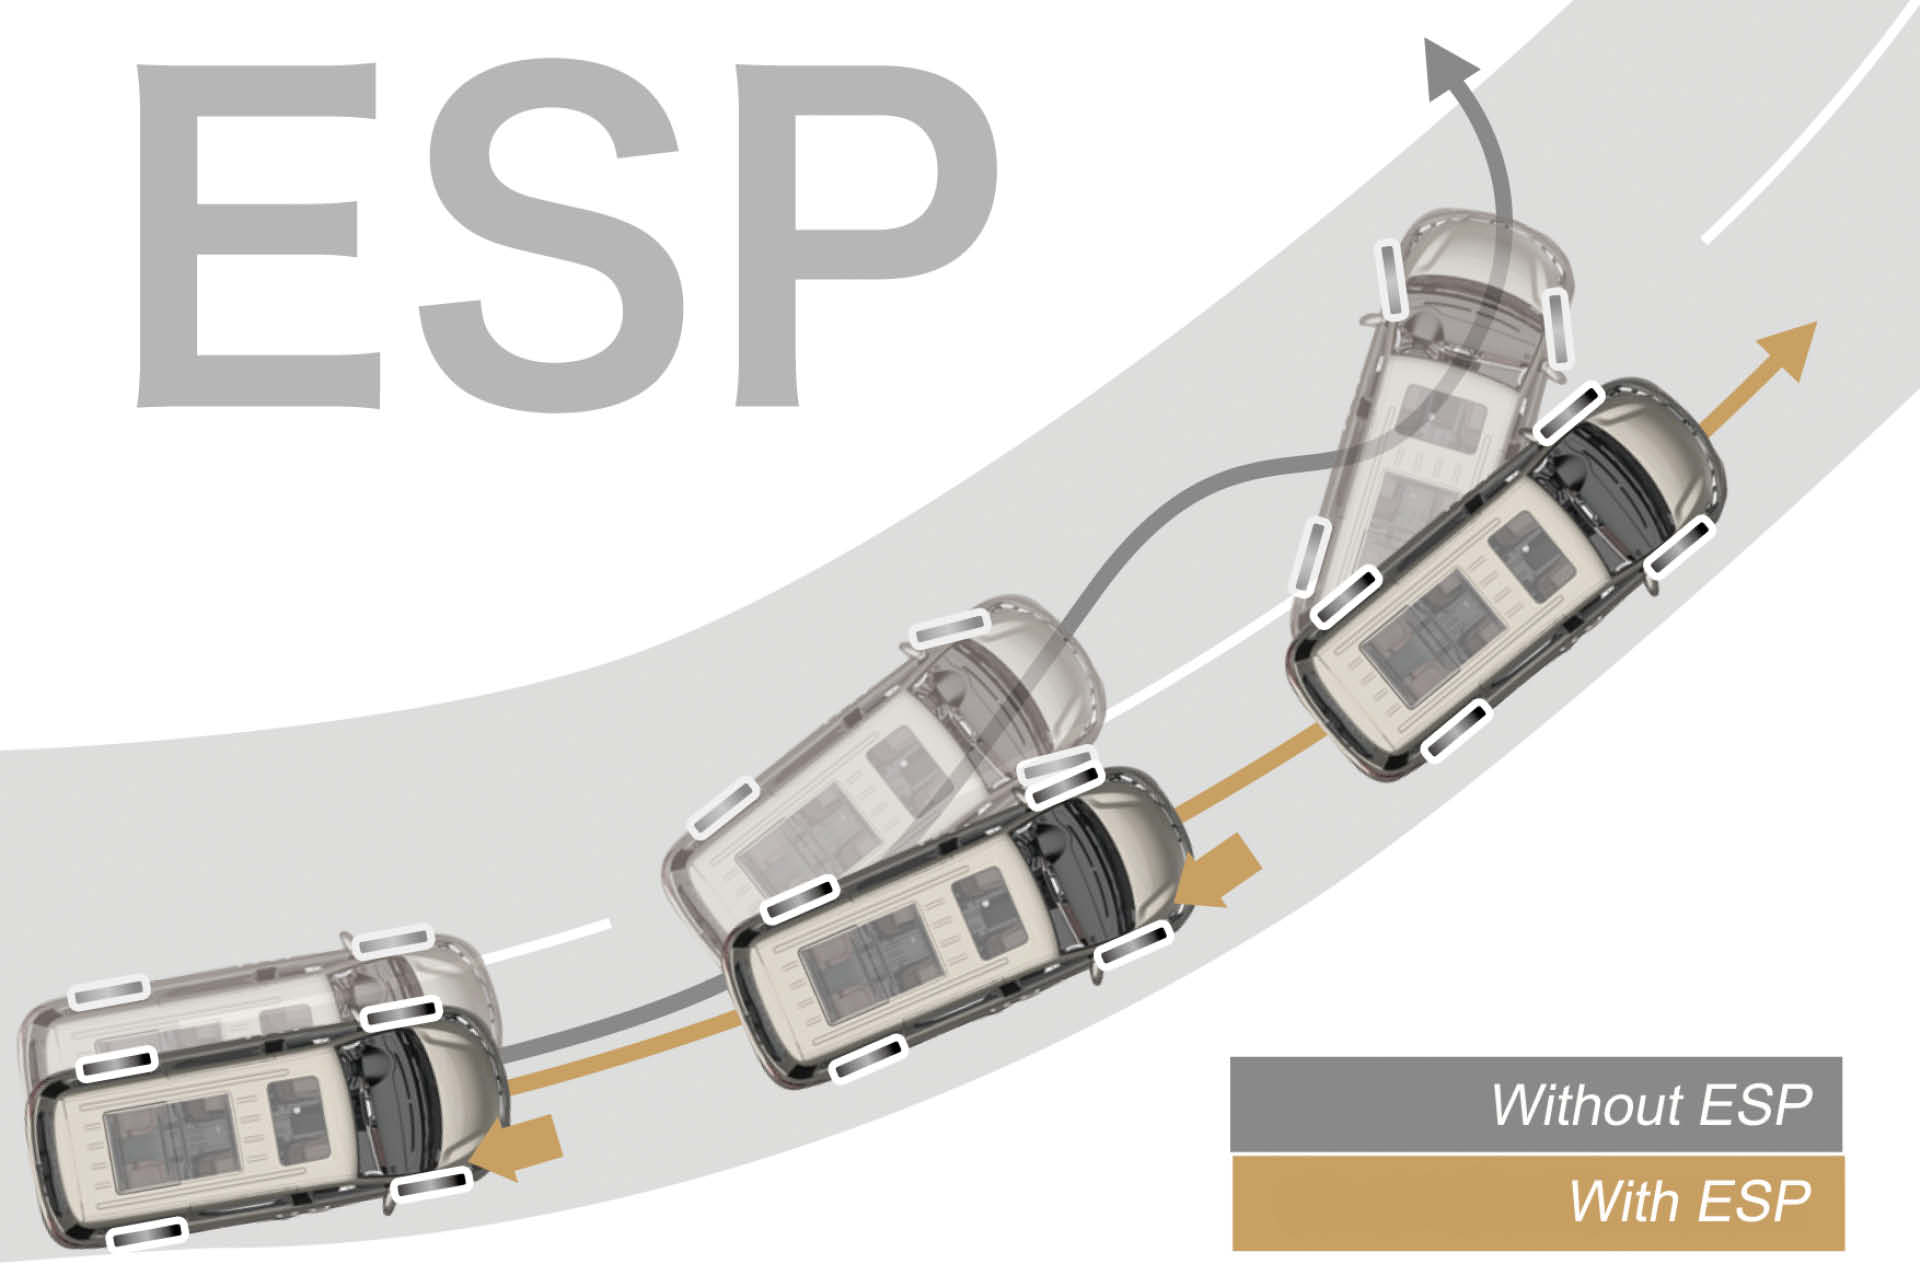 ESP(Electric Stabilization System)